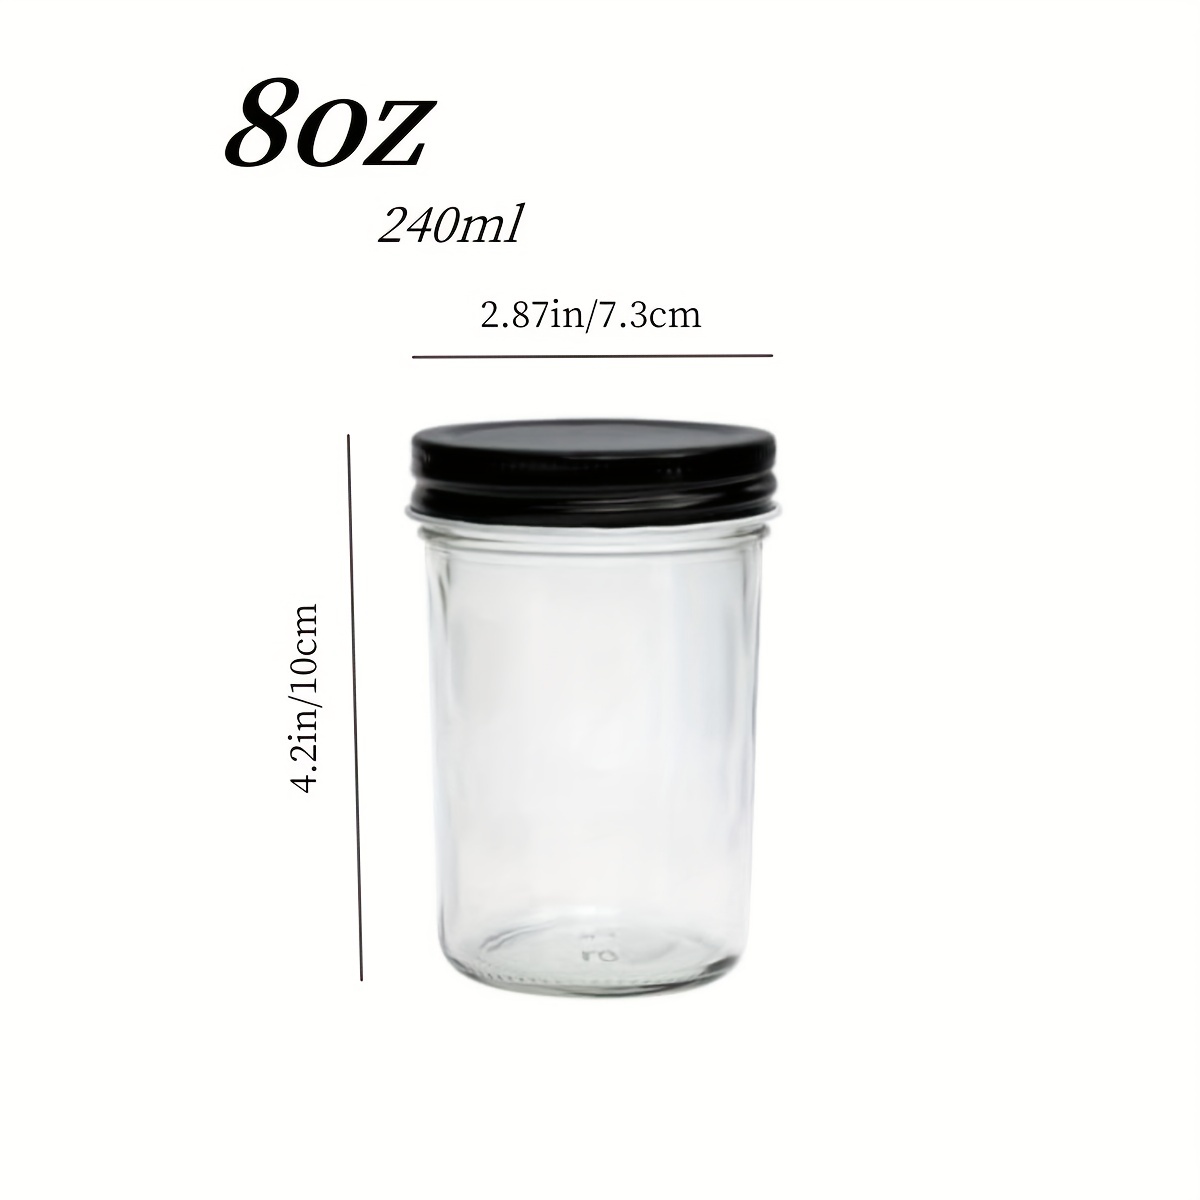 240ml Square Glass Jars With Lids (8 oz)